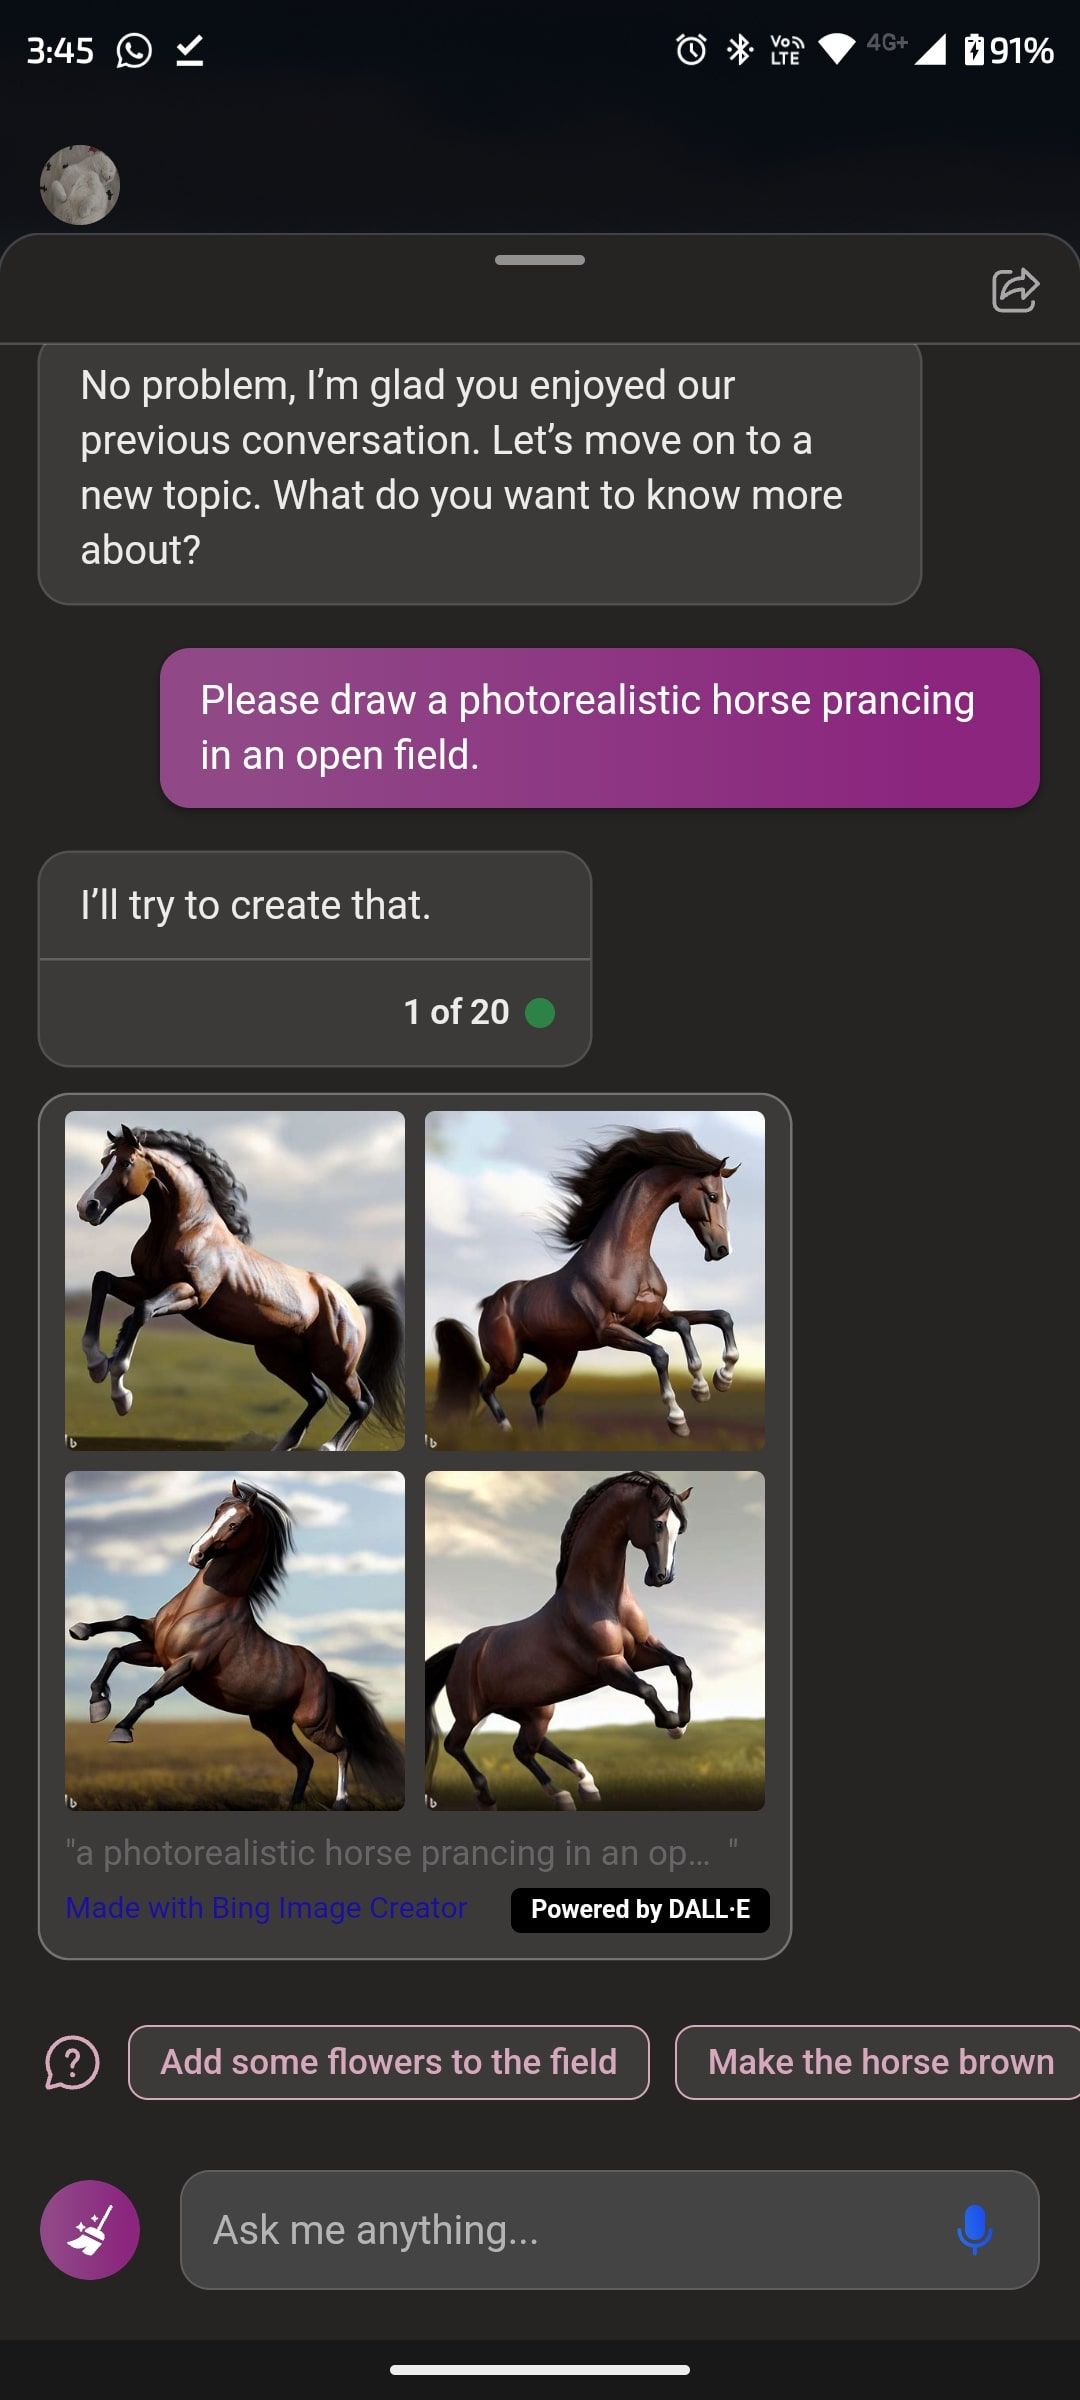 Bing app horse image generation results